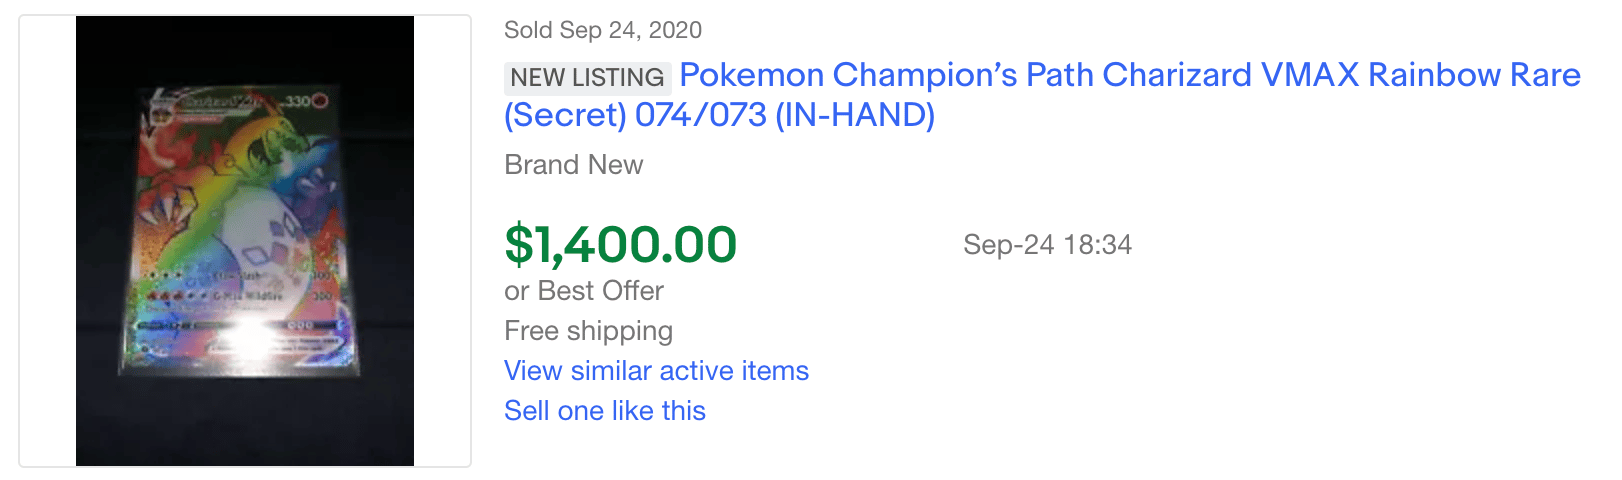 pokemon charizard ebay listing